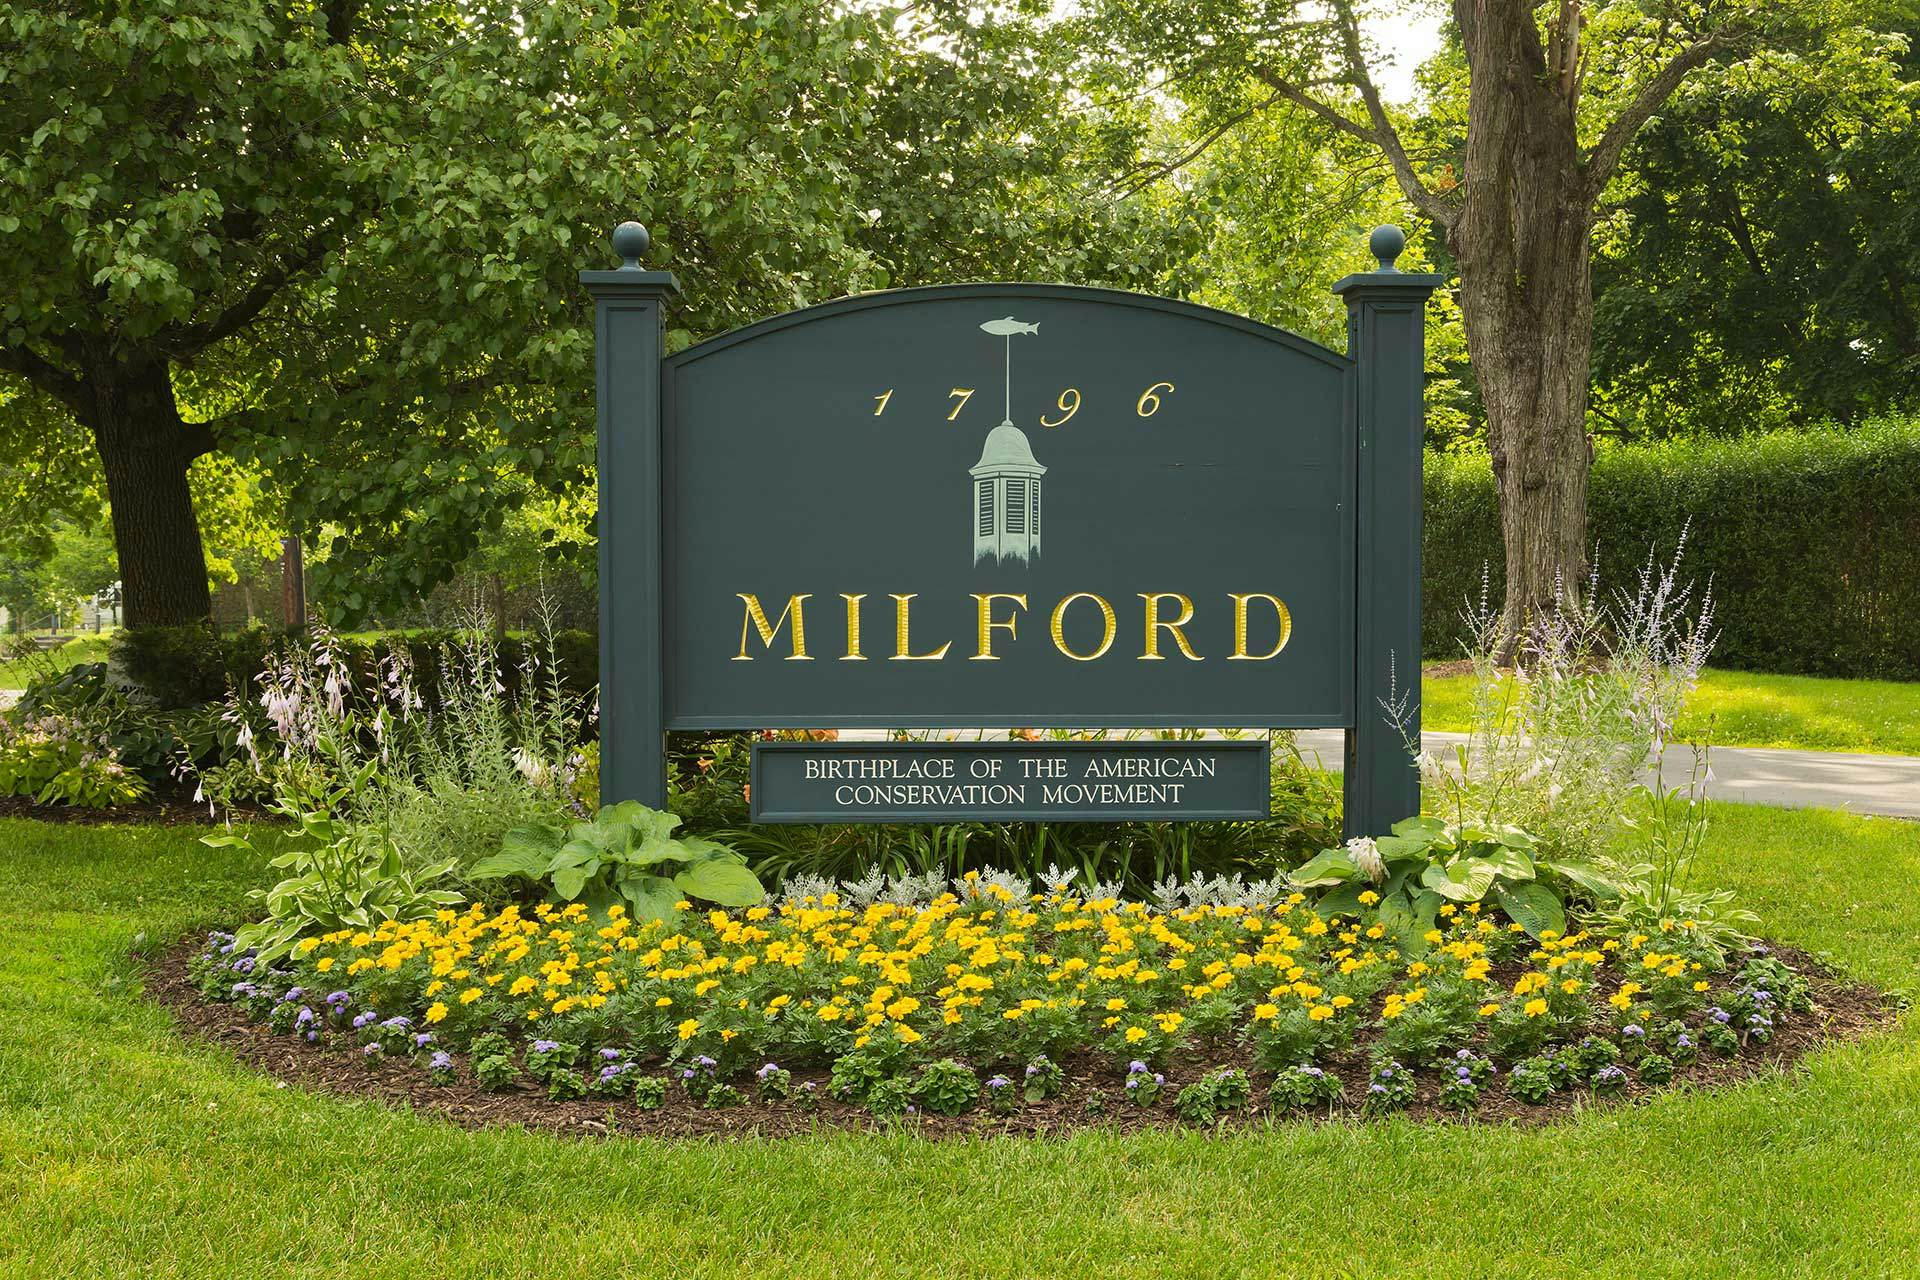 Milford image